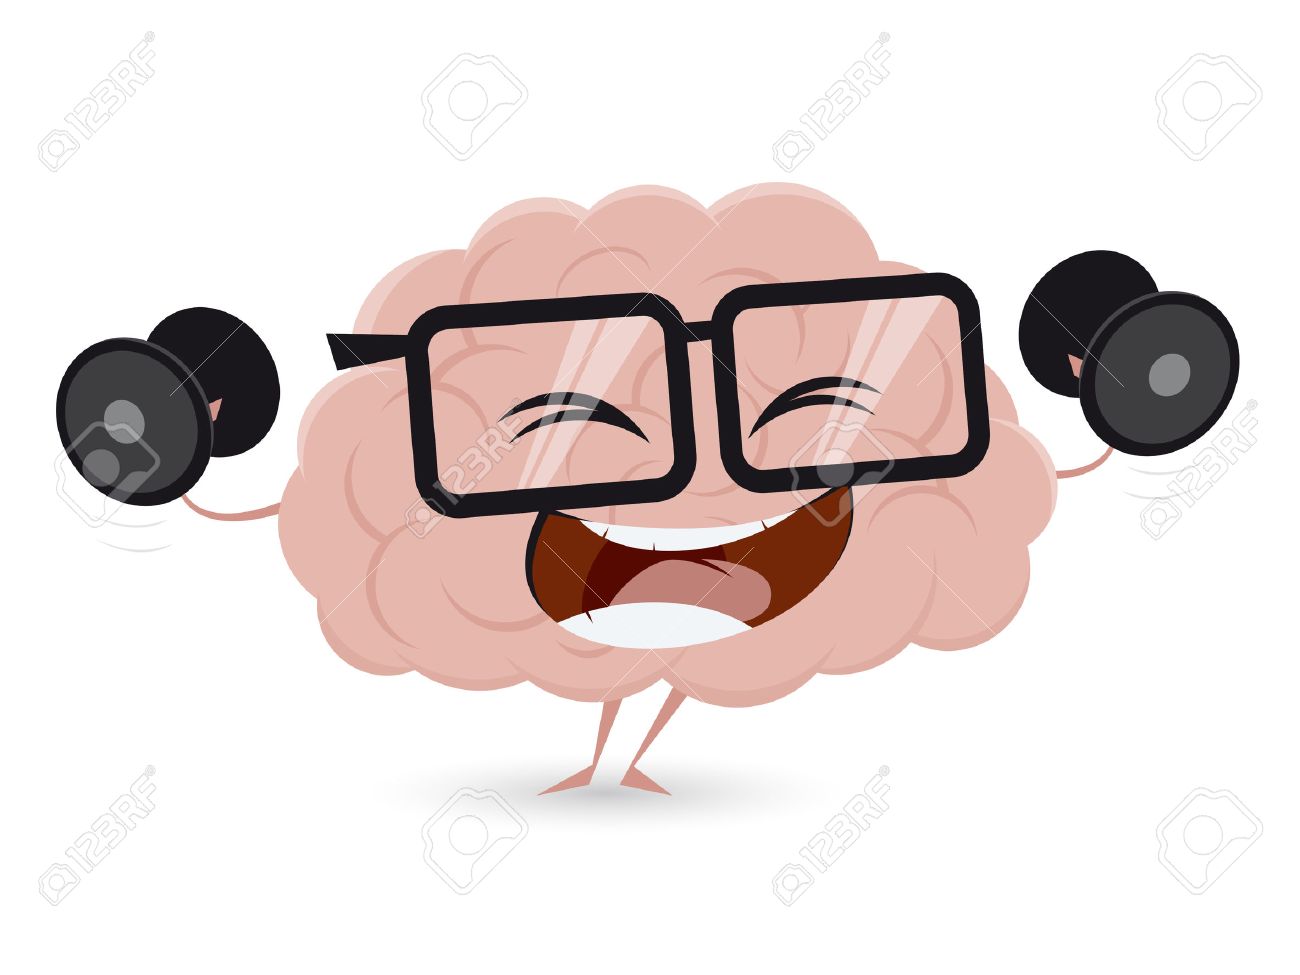 exercise clipart brain